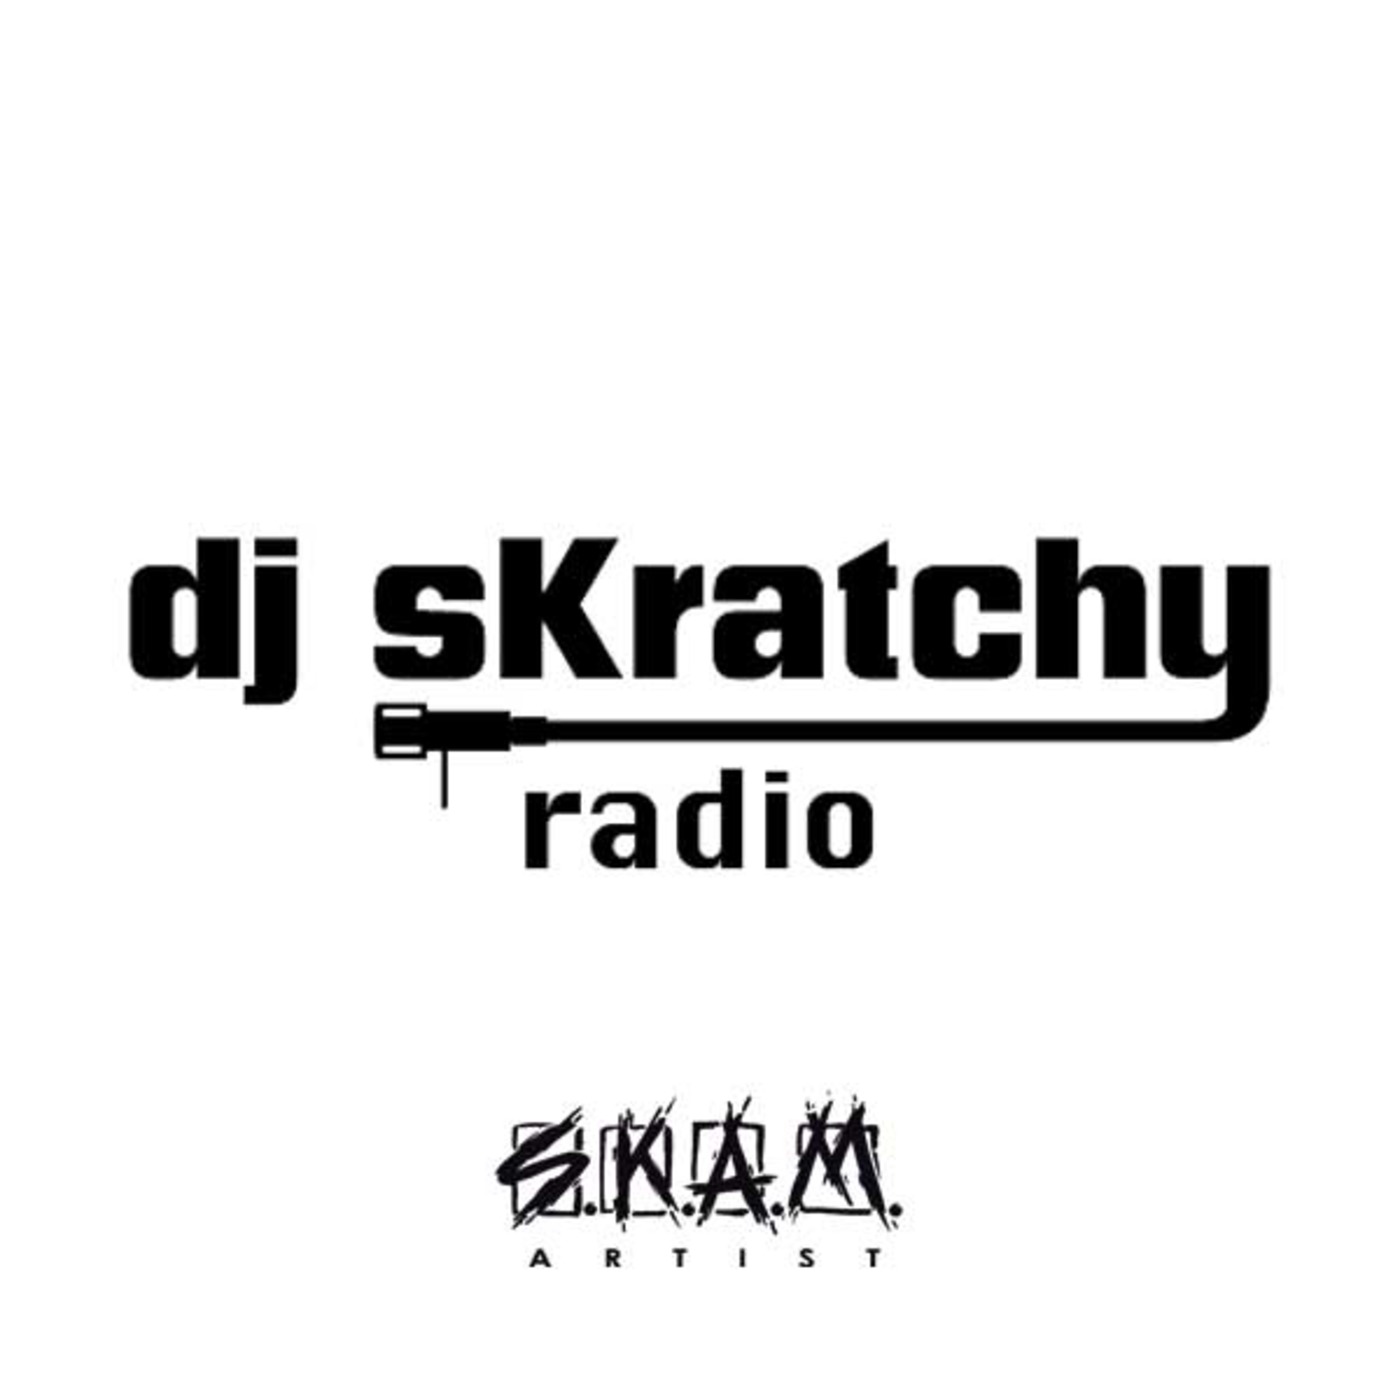 dj sKratchy – August 2011 Podcast Jump-Off Mix Part 1